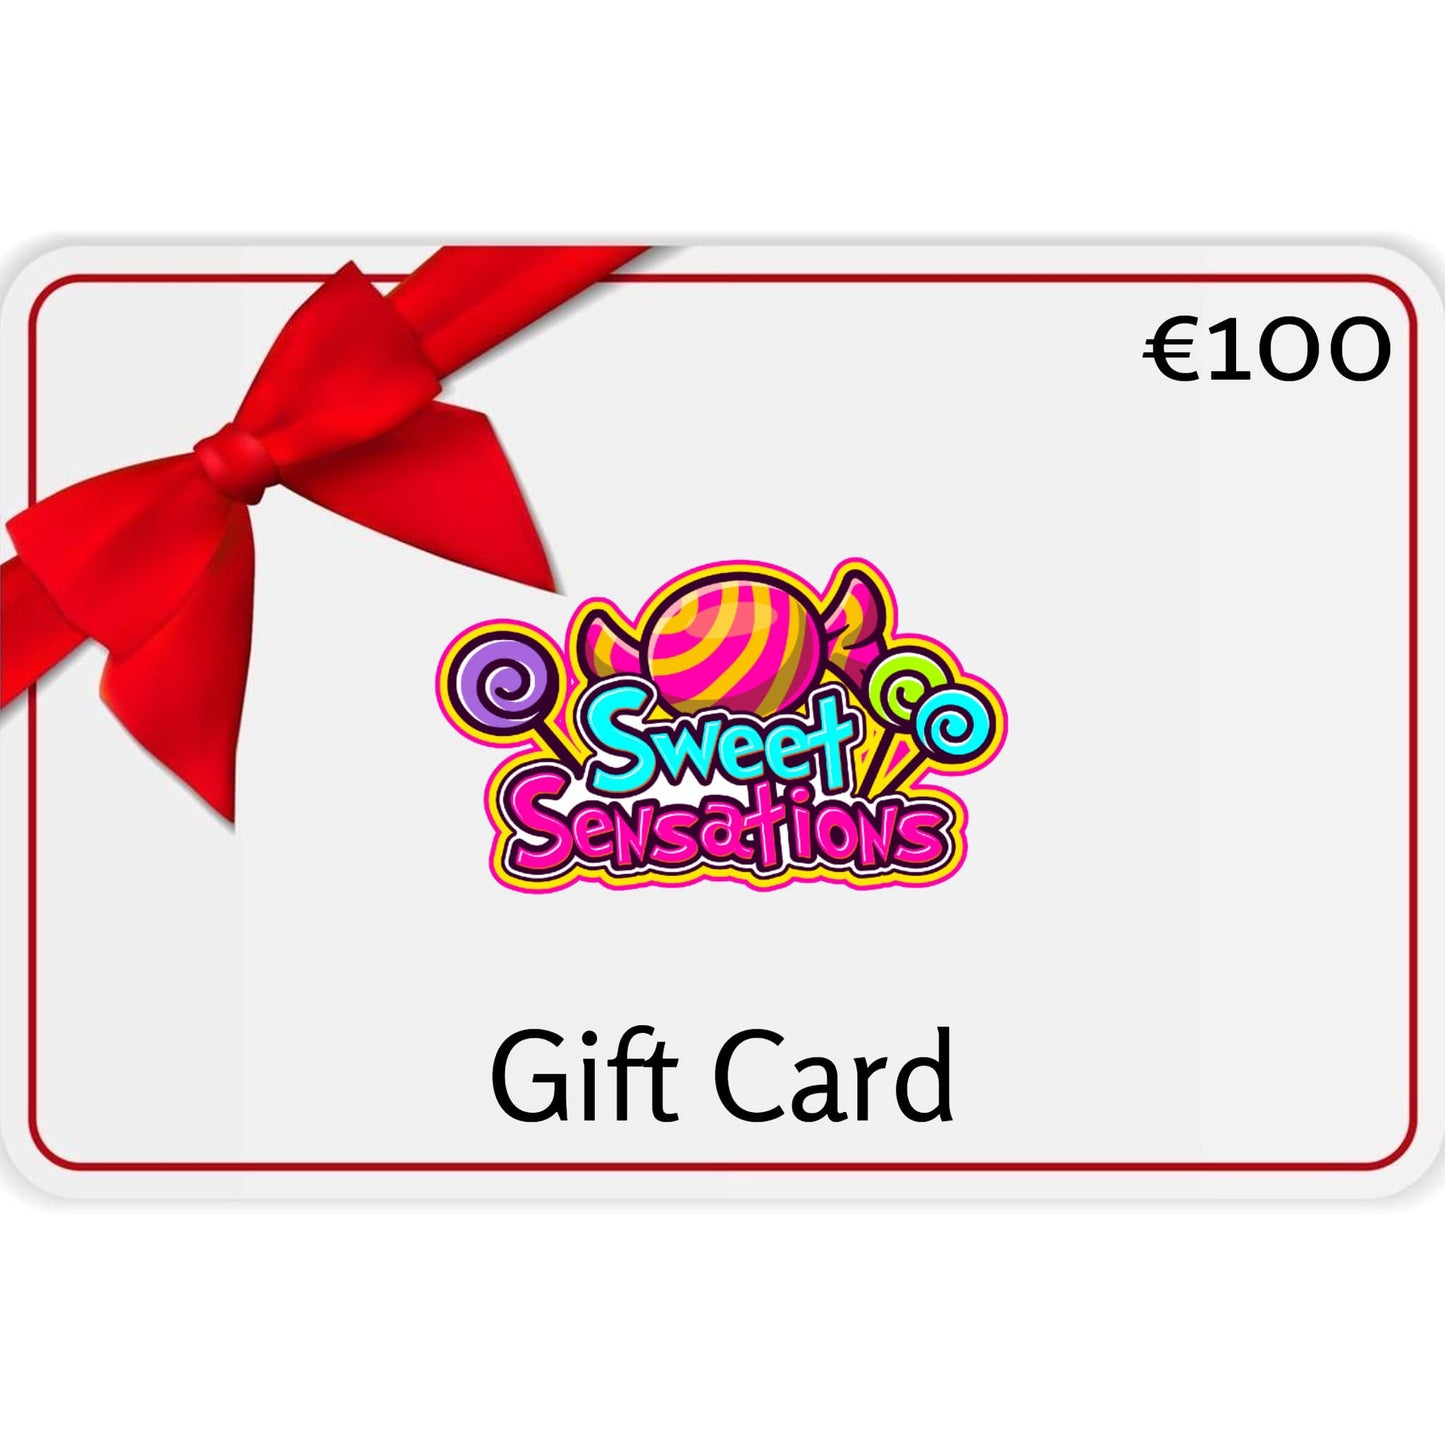 Sweet Sensations €100 Gift Card